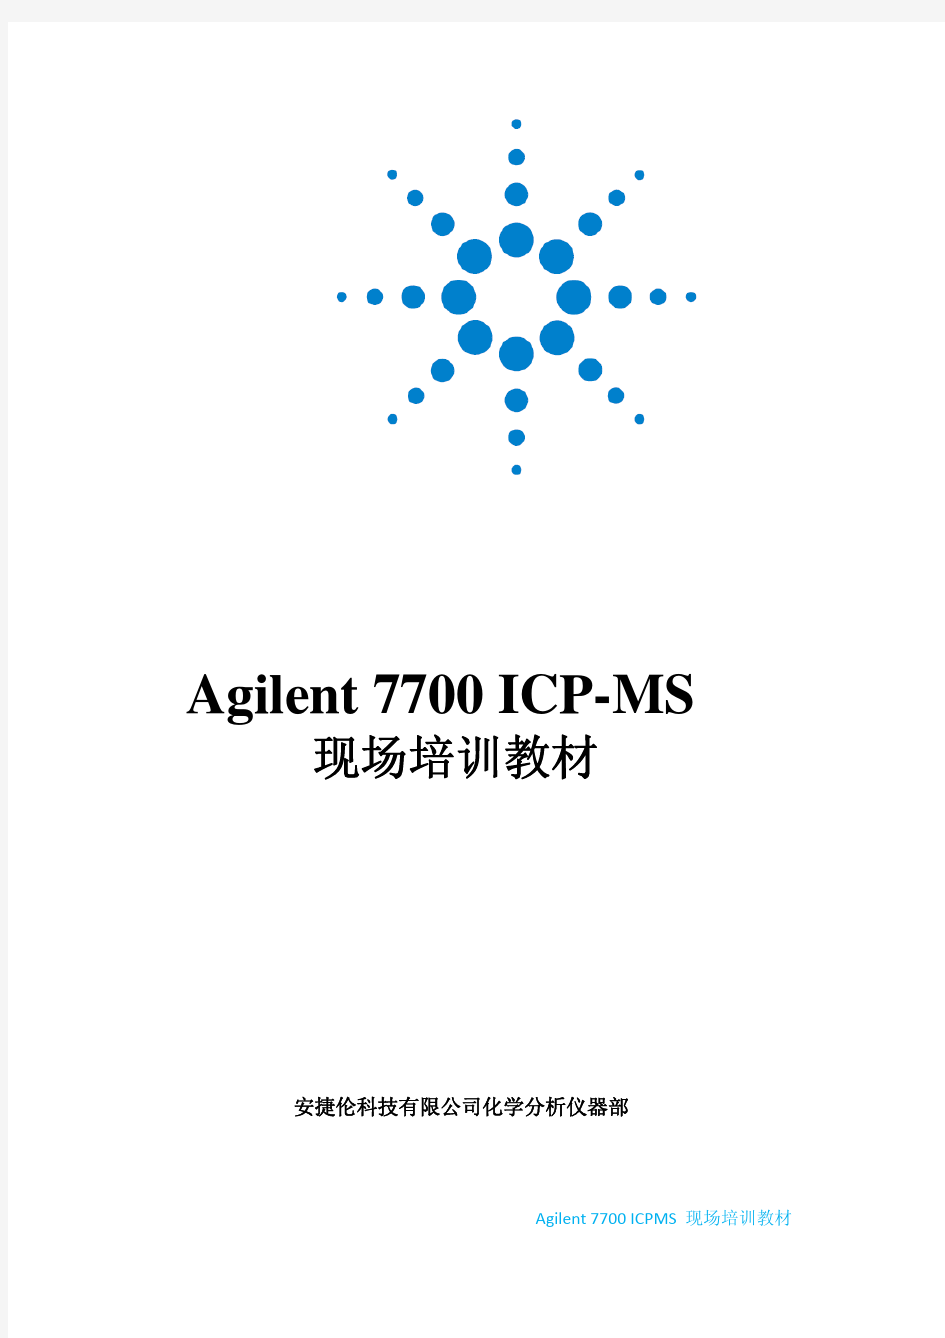 Agilent 7700 ICP-MS现场培训教材